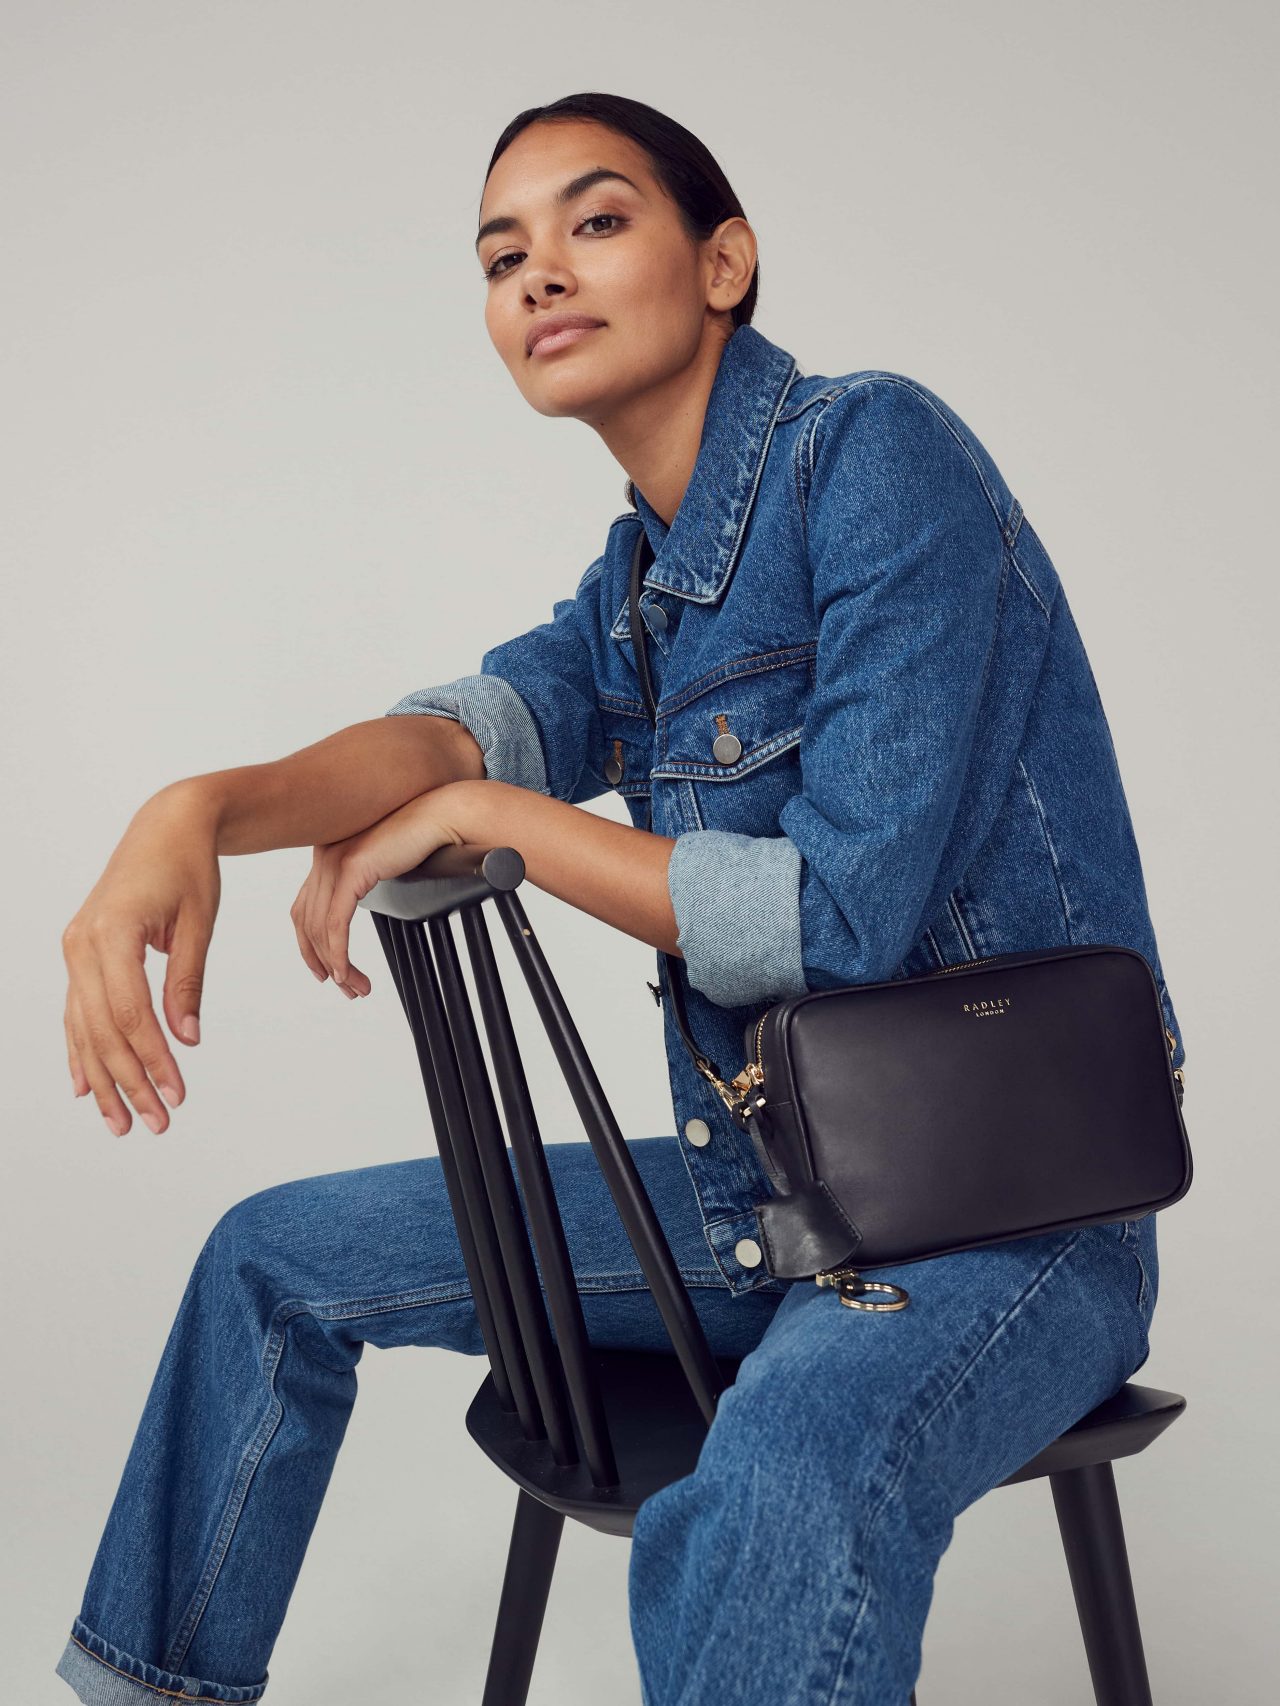 Model with Manor Grove leather crossbody handbag